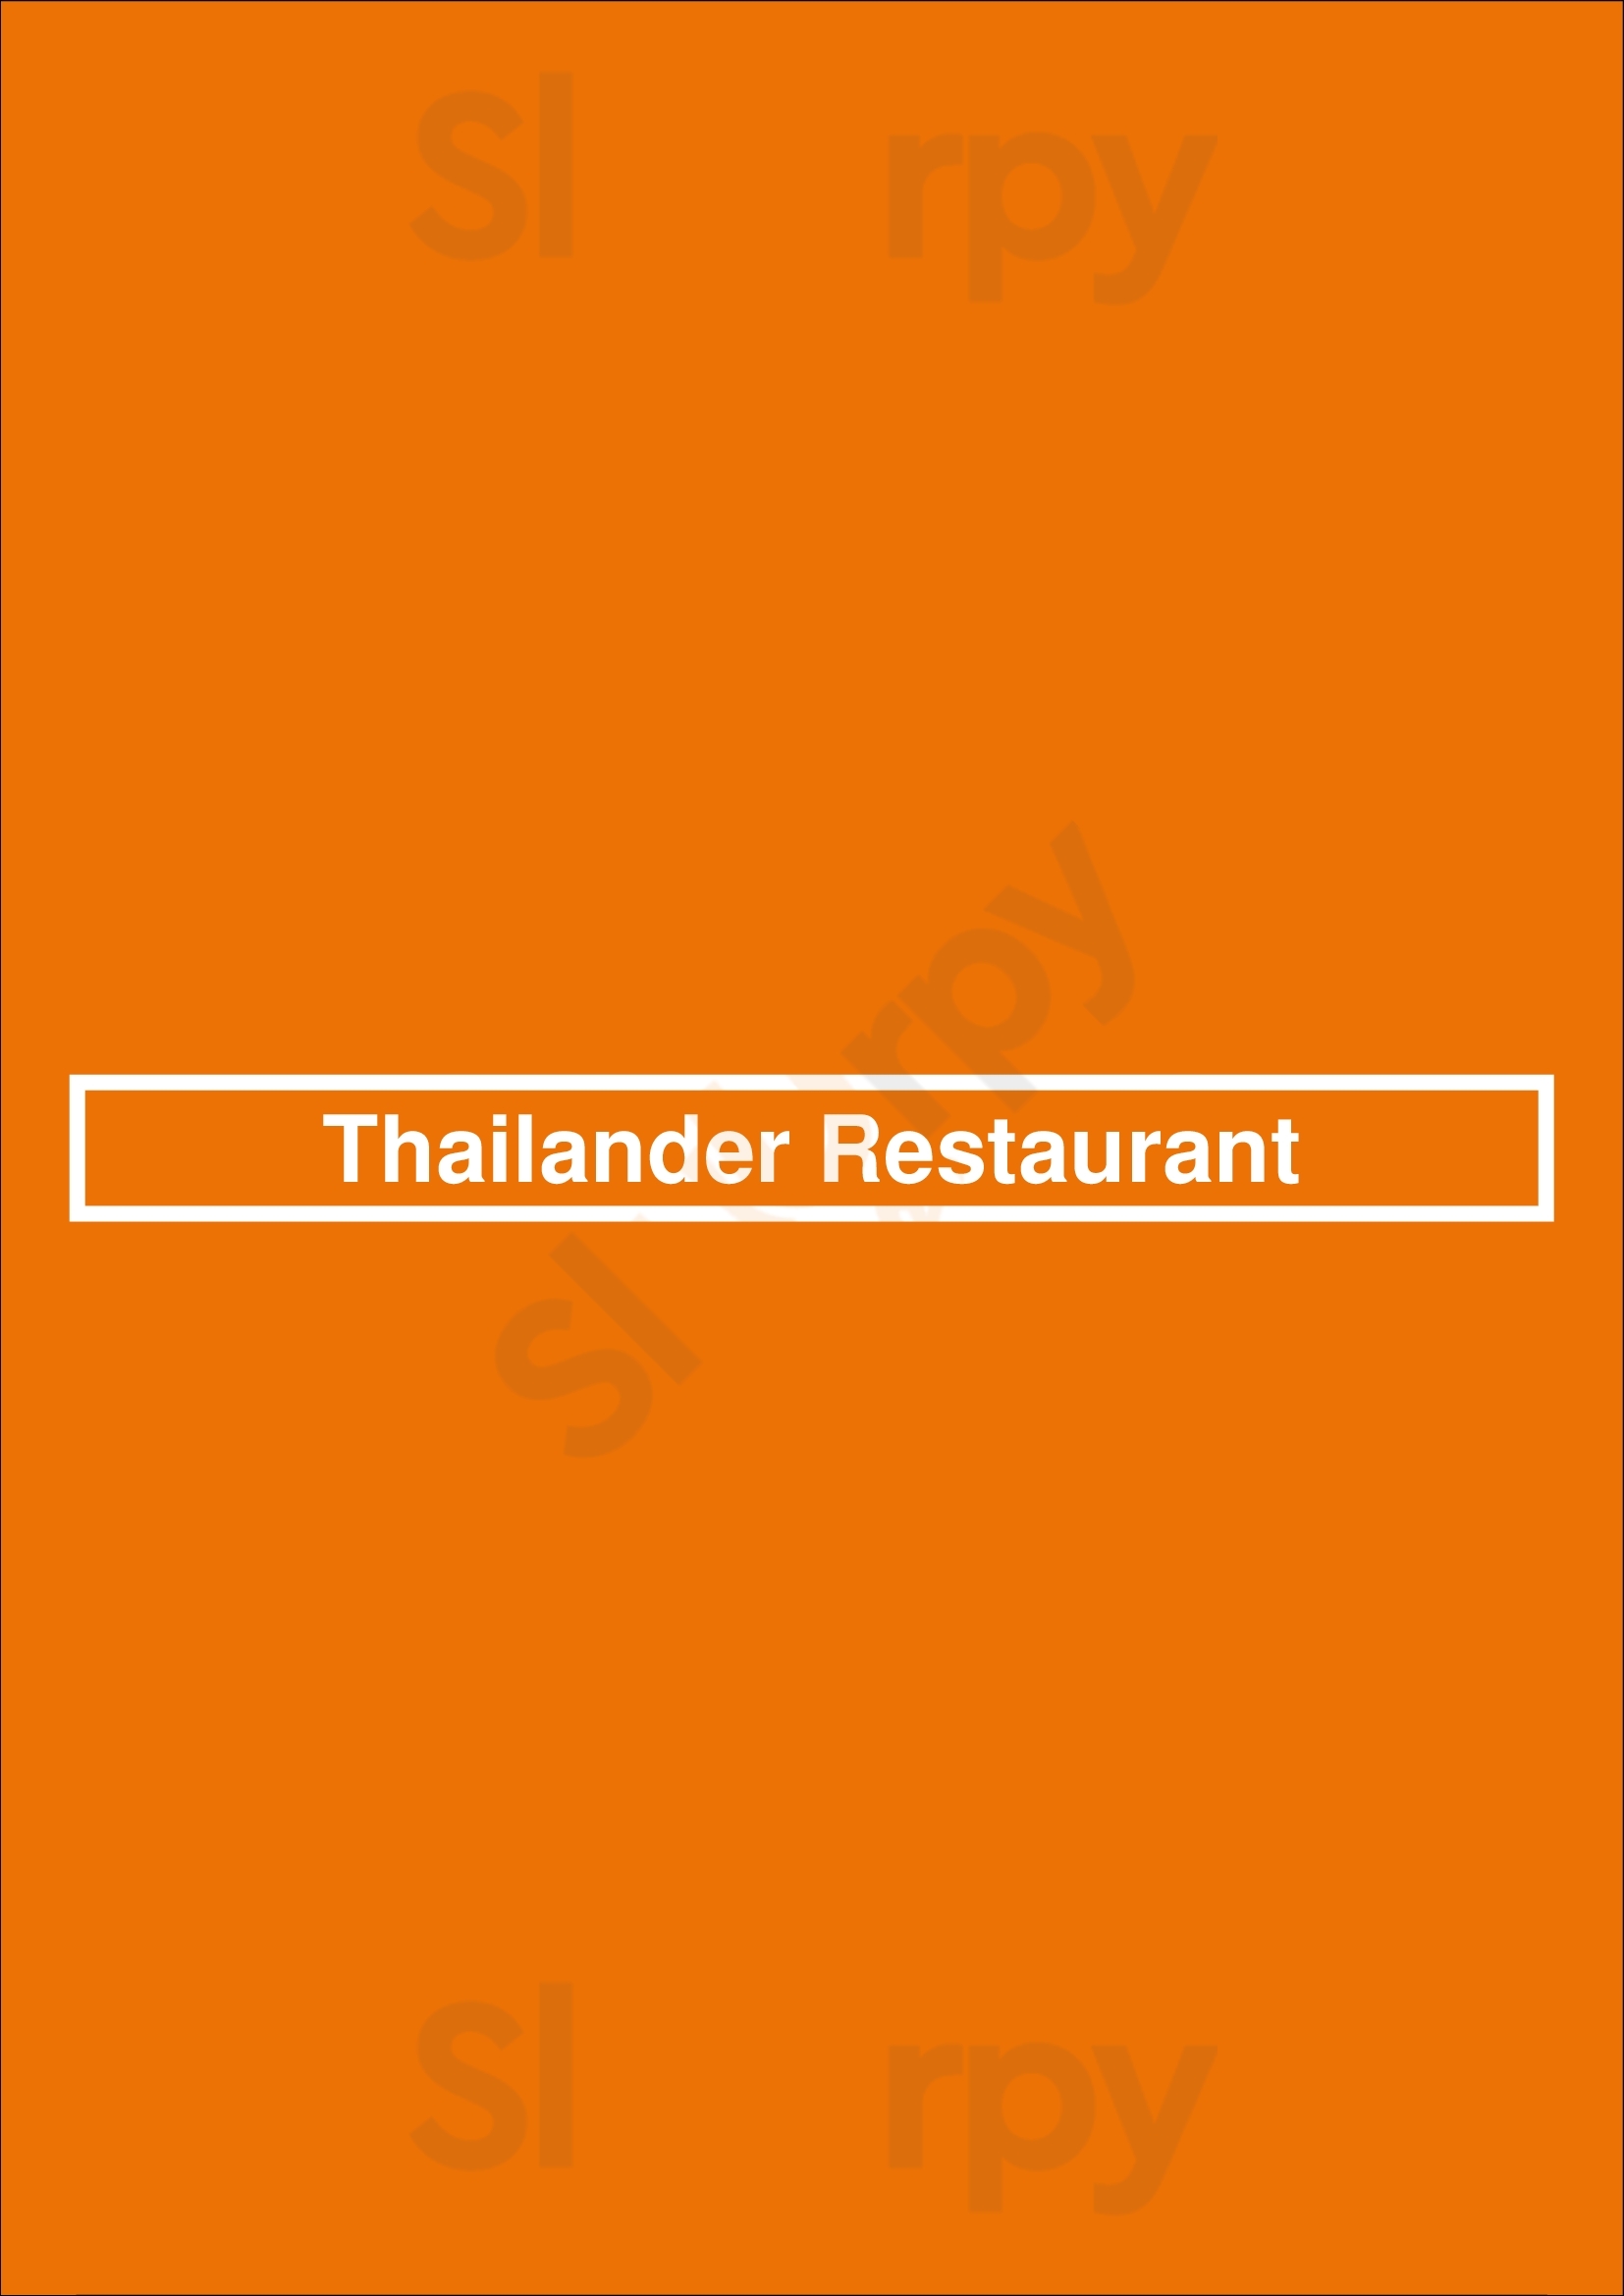 Thailander Restaurant Hillsboro Menu - 1